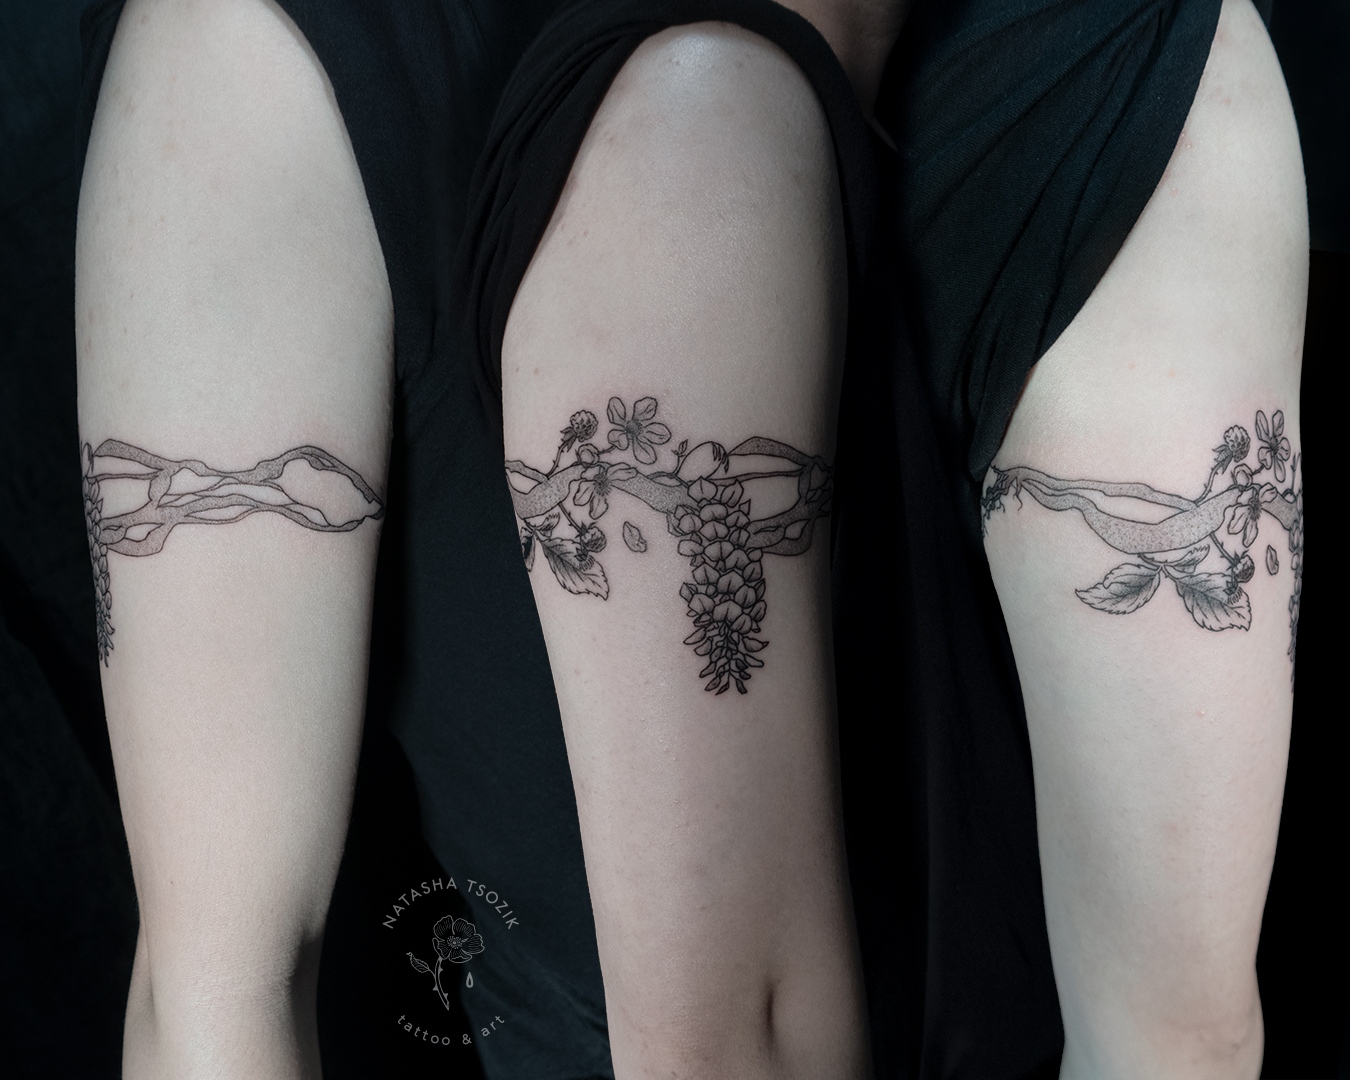 Botanical arm band tattoo.